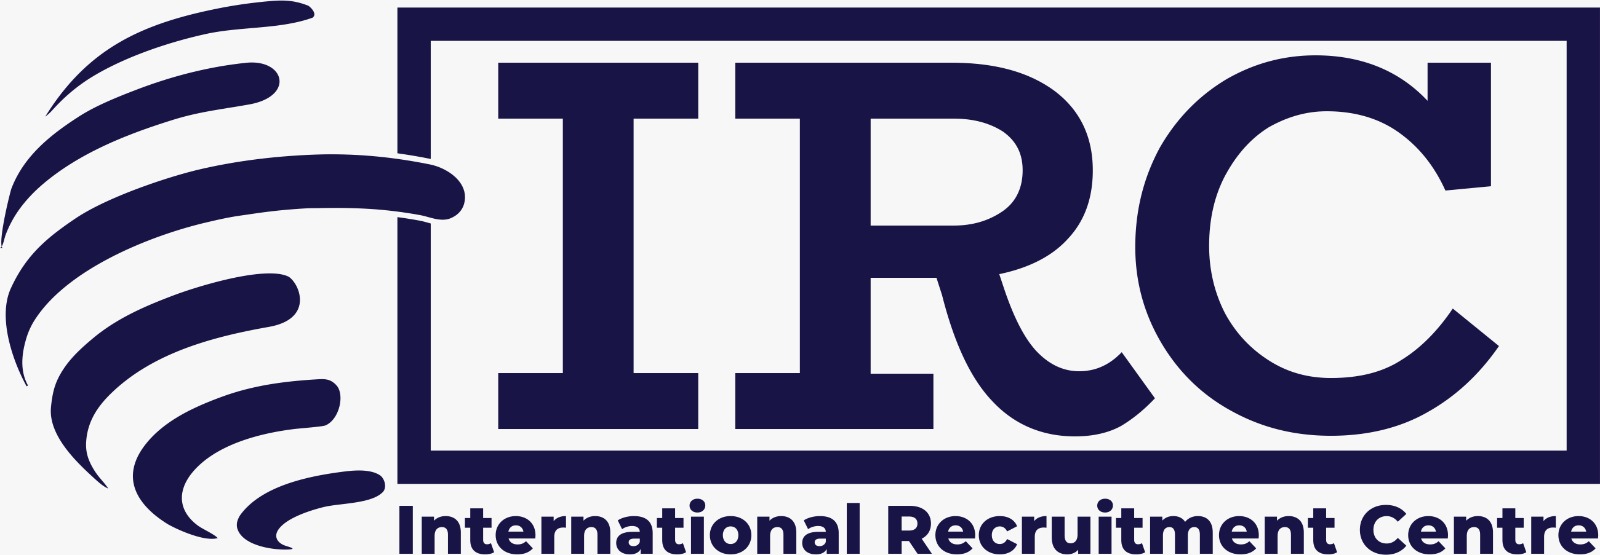 International Recruitment Centre Pte. Ltd. company logo